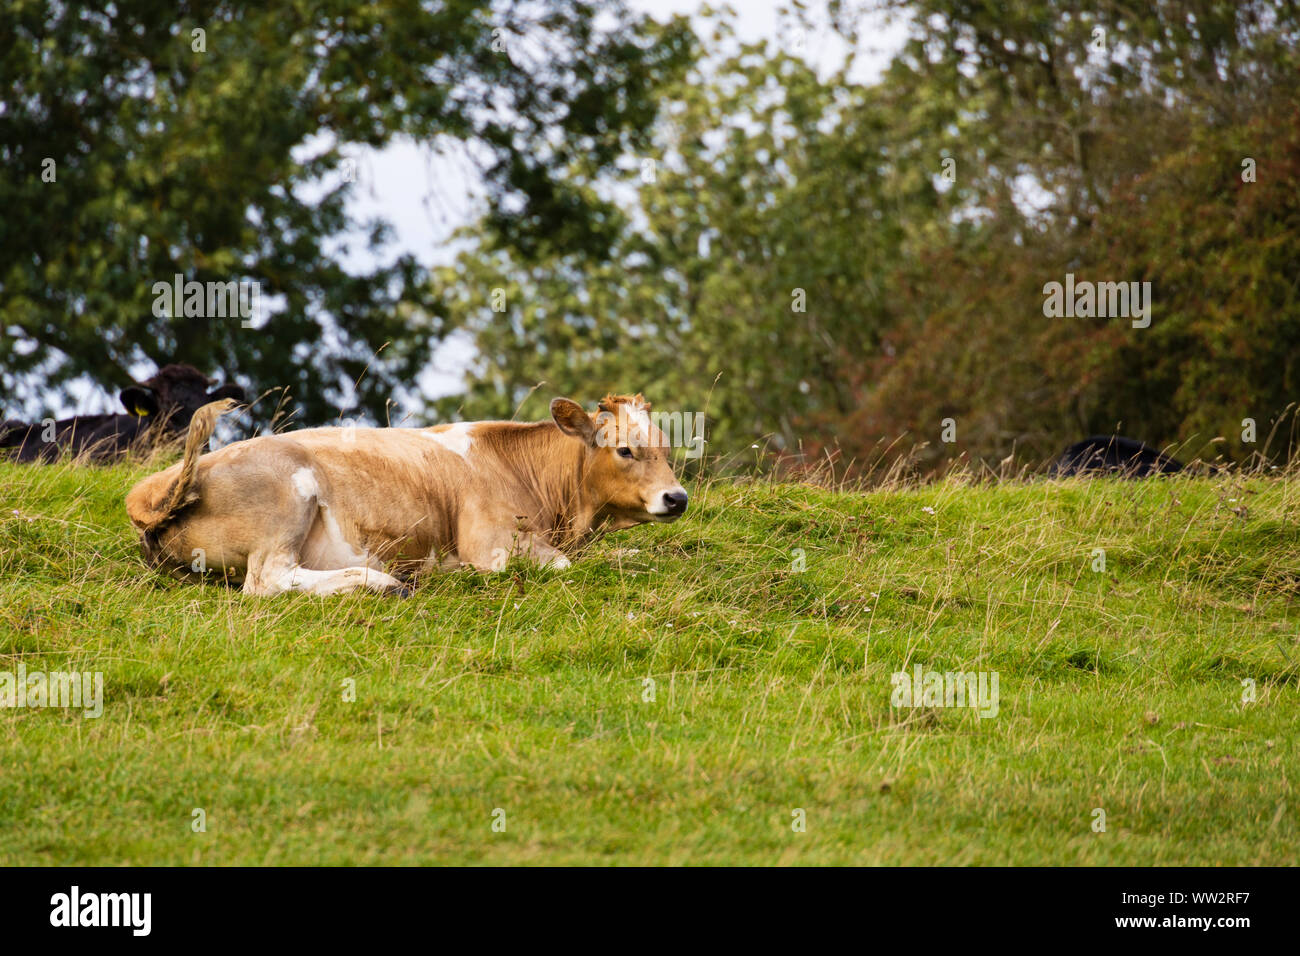 Kuh liegend auf der Wiese am Ufer des Flusses Trent, Gunthorpe, Nottinghamshire. Stockfoto